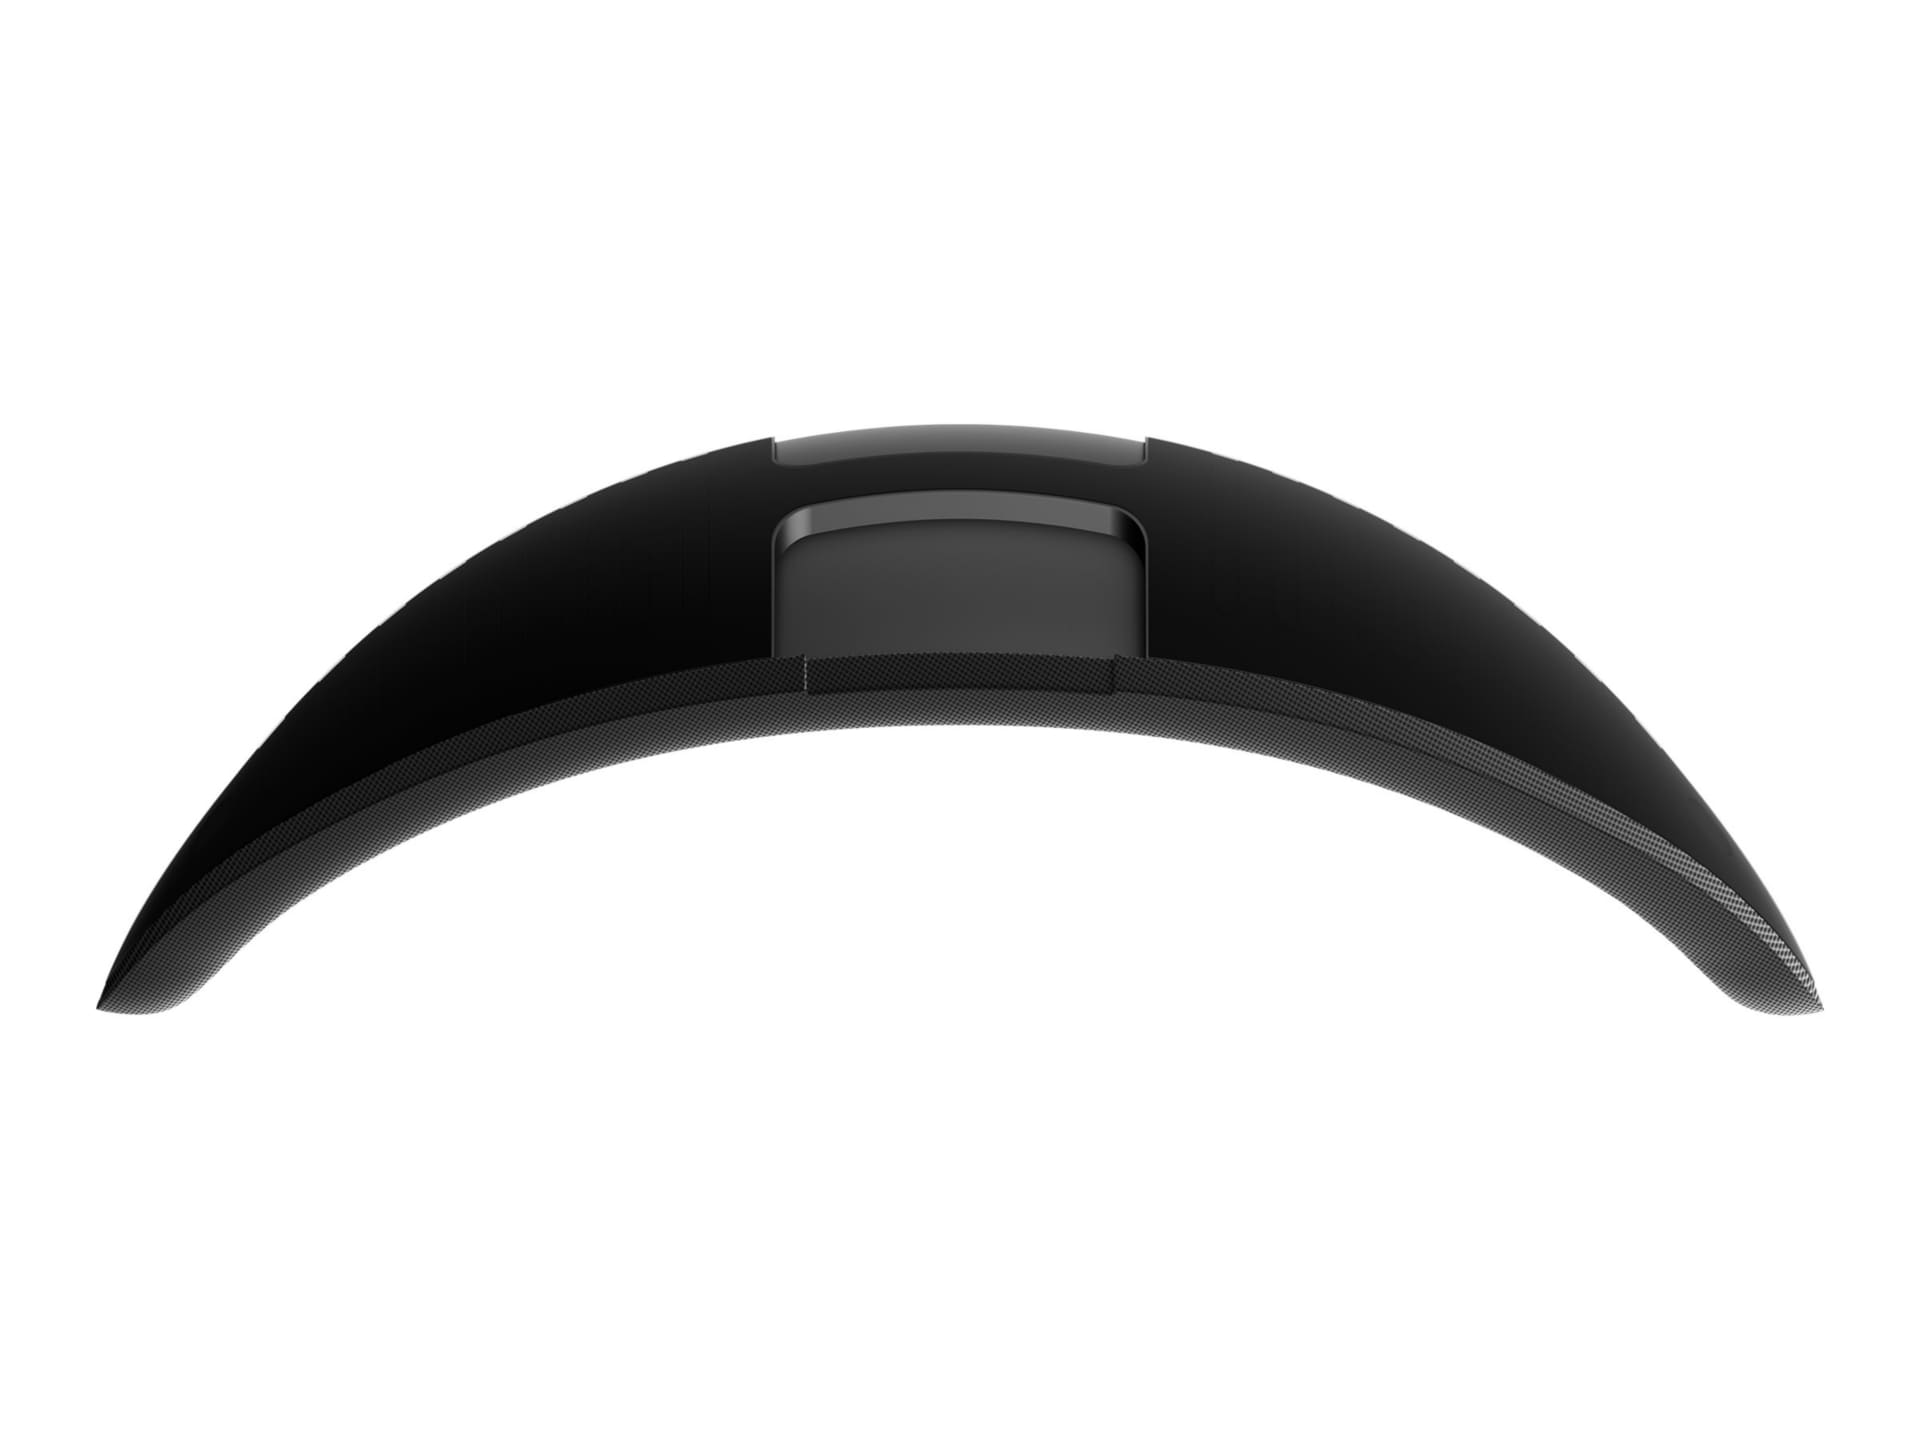 Microsoft - brow pad for smart glasses